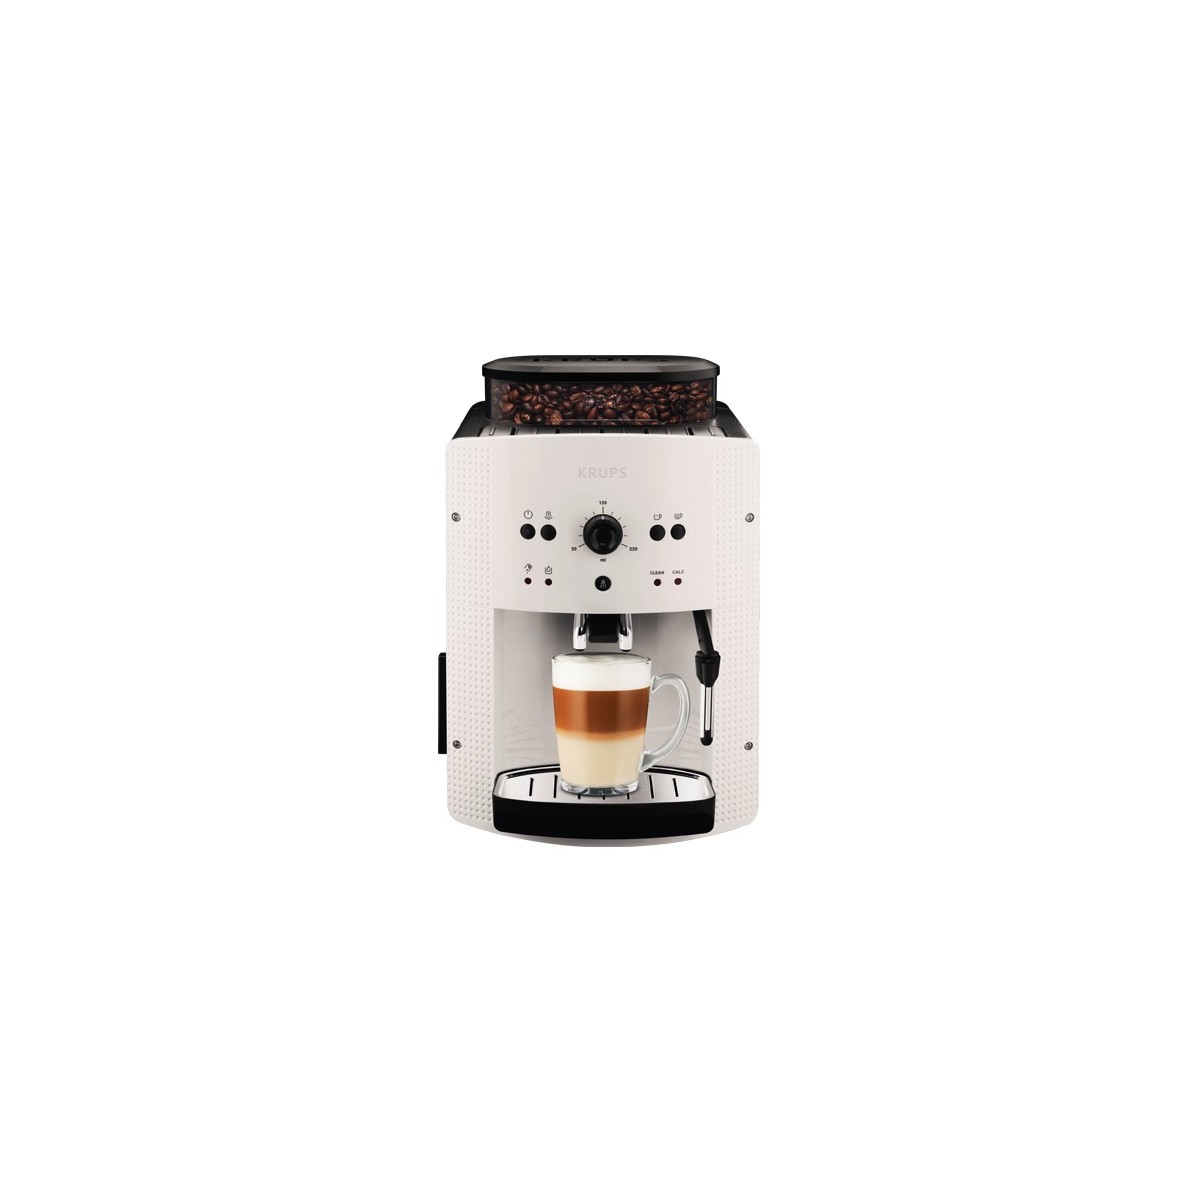 Krups EA8105 - Espresso machine - 1.6 L - Coffee beans - Built-in grinder - 1450 W - White